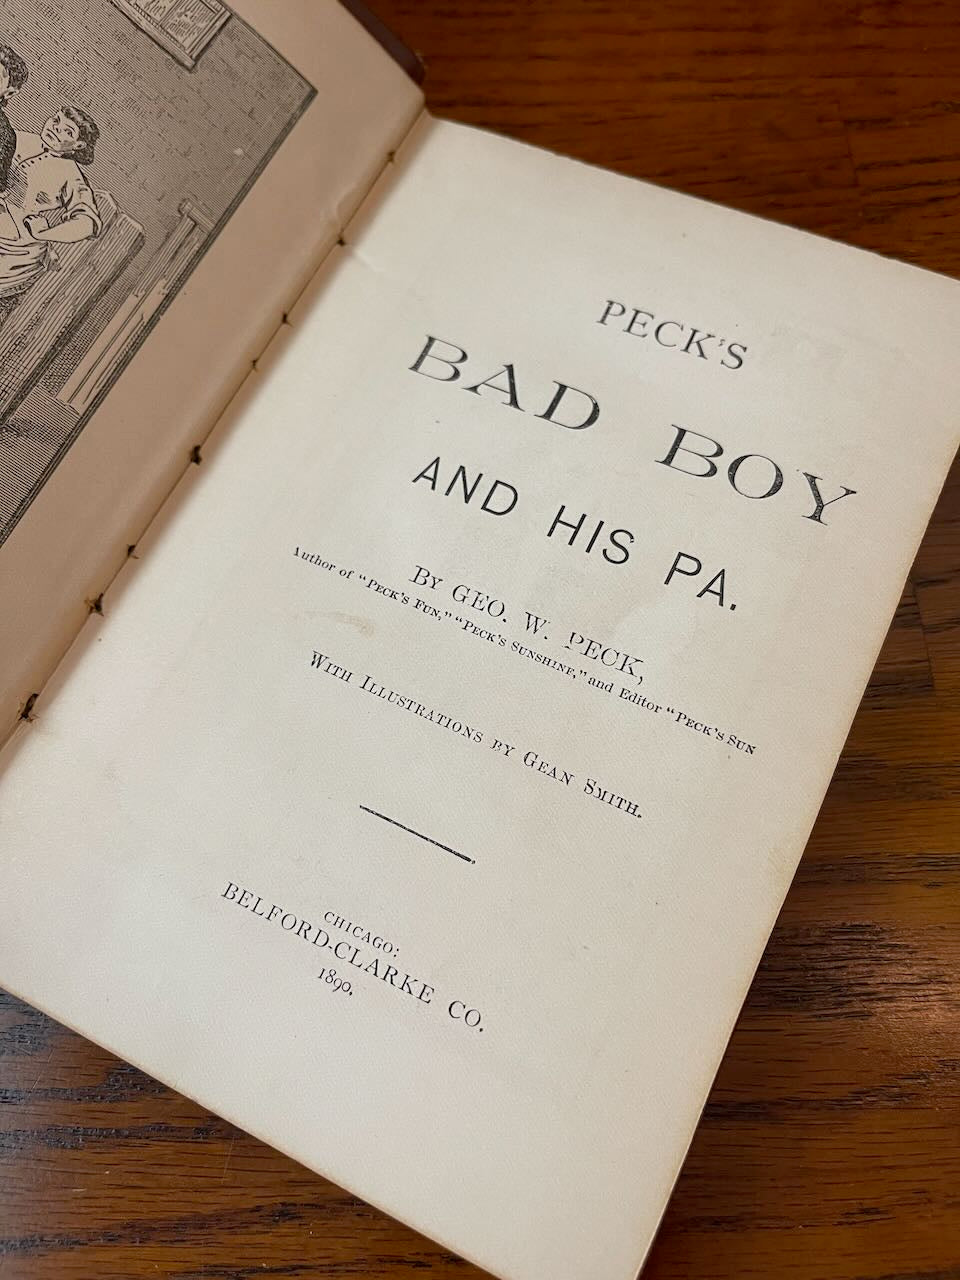 Peck's / Bad Boy and his Pa. Parts 1 & 2 / Boss Book / ca. 1890 - Precious Cache